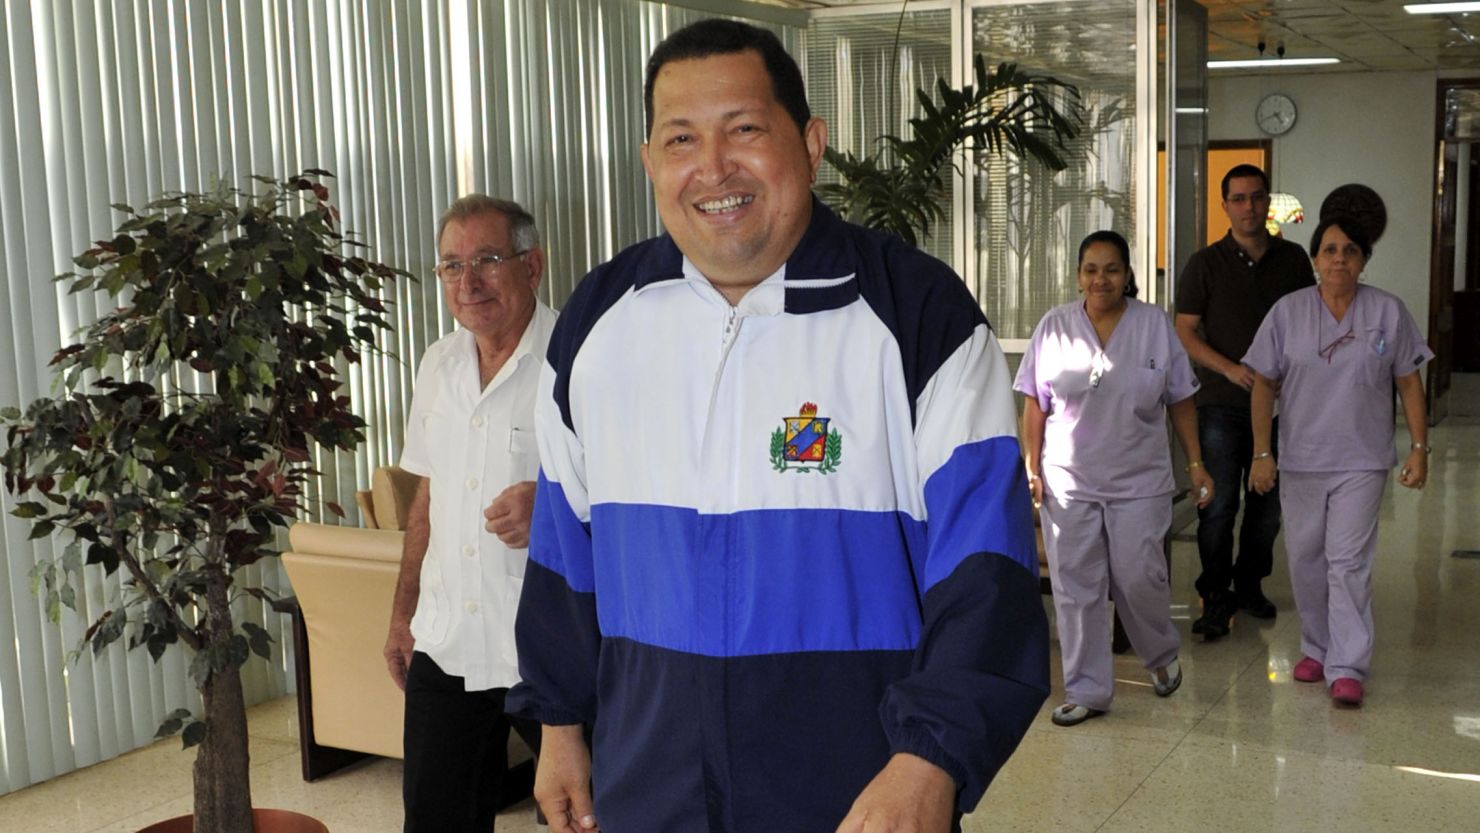 In a photo released Friday, Hugo Chavez walks through the hospital in Havana, Cuba, where he was treated.